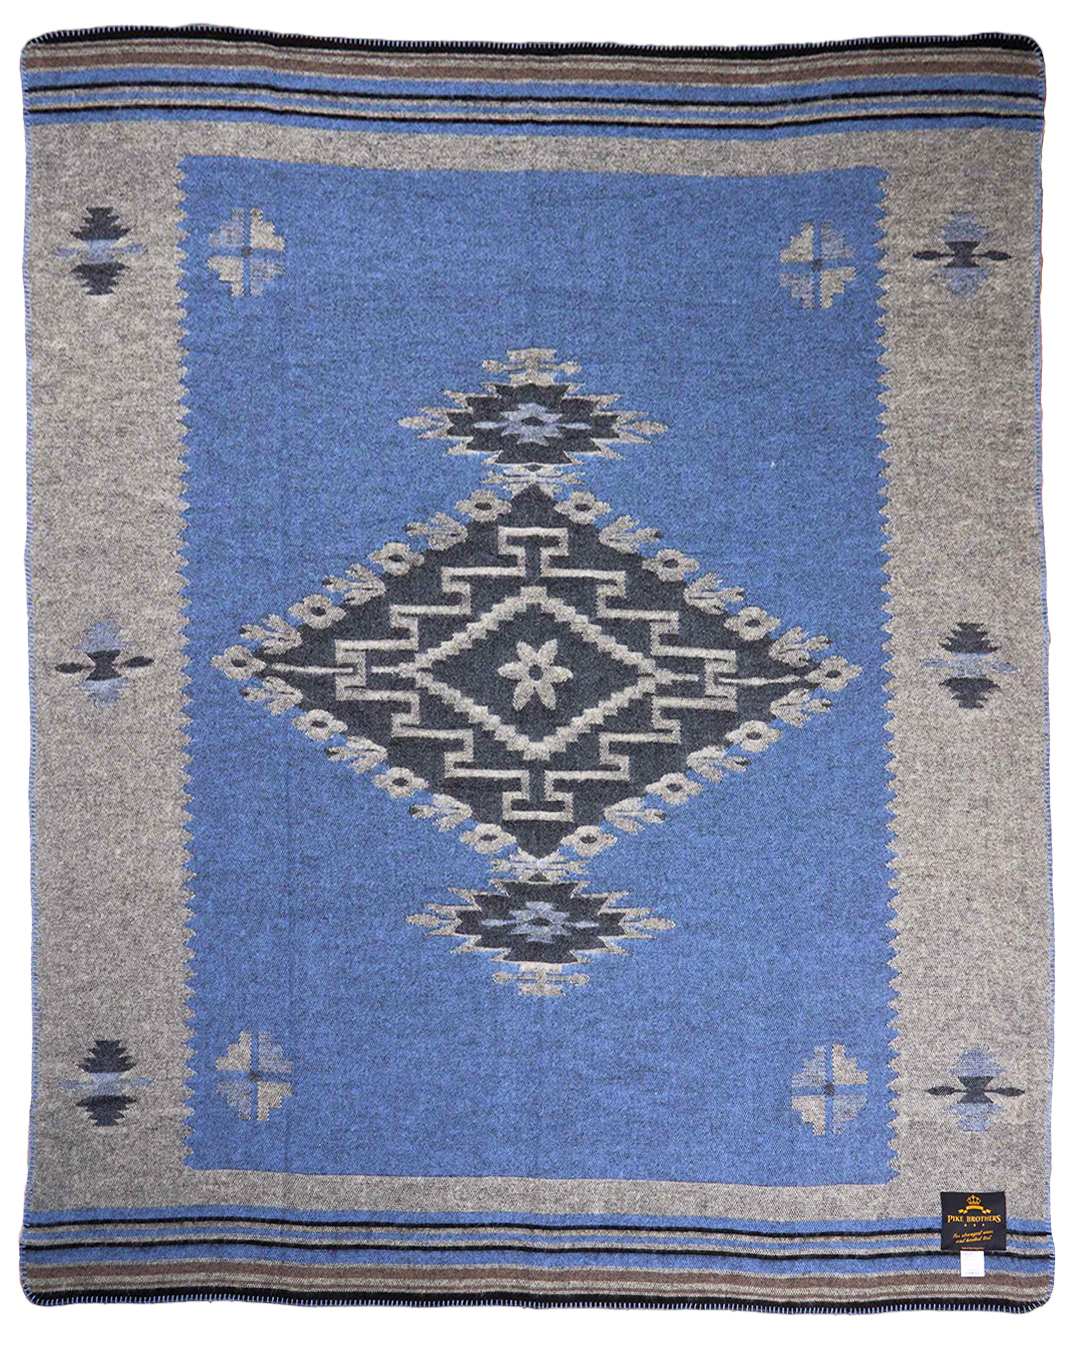 1969 Tolani wool blanket blue